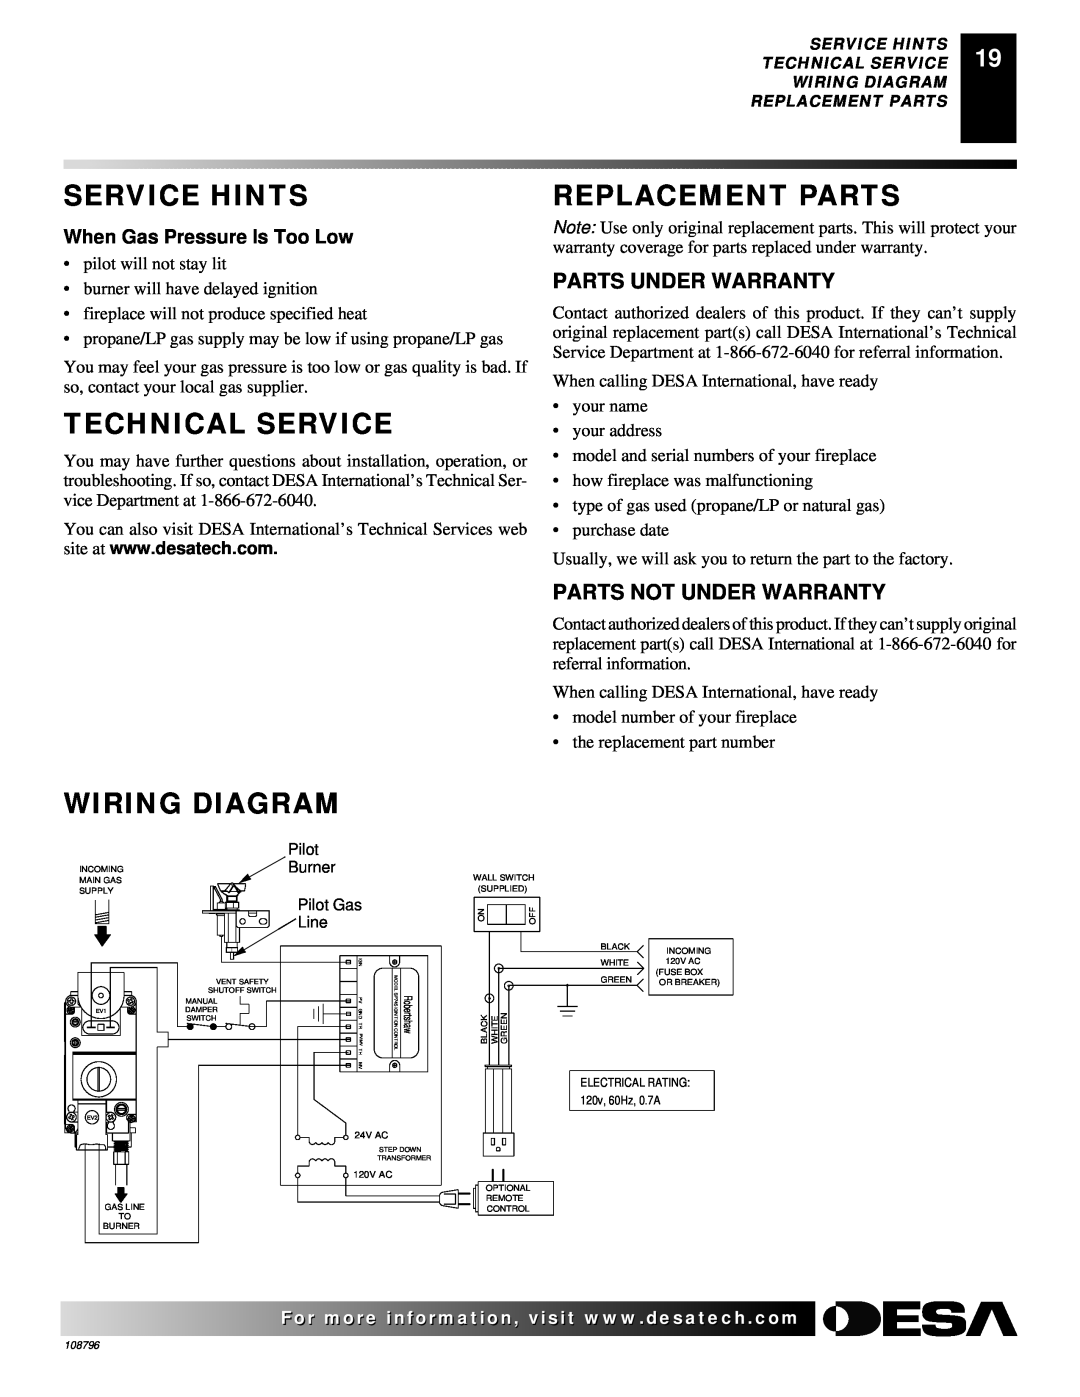 Desa VM42E, VM36E installation manual Service Hints, Technical Service, Replacement Parts, Wiring Diagram 